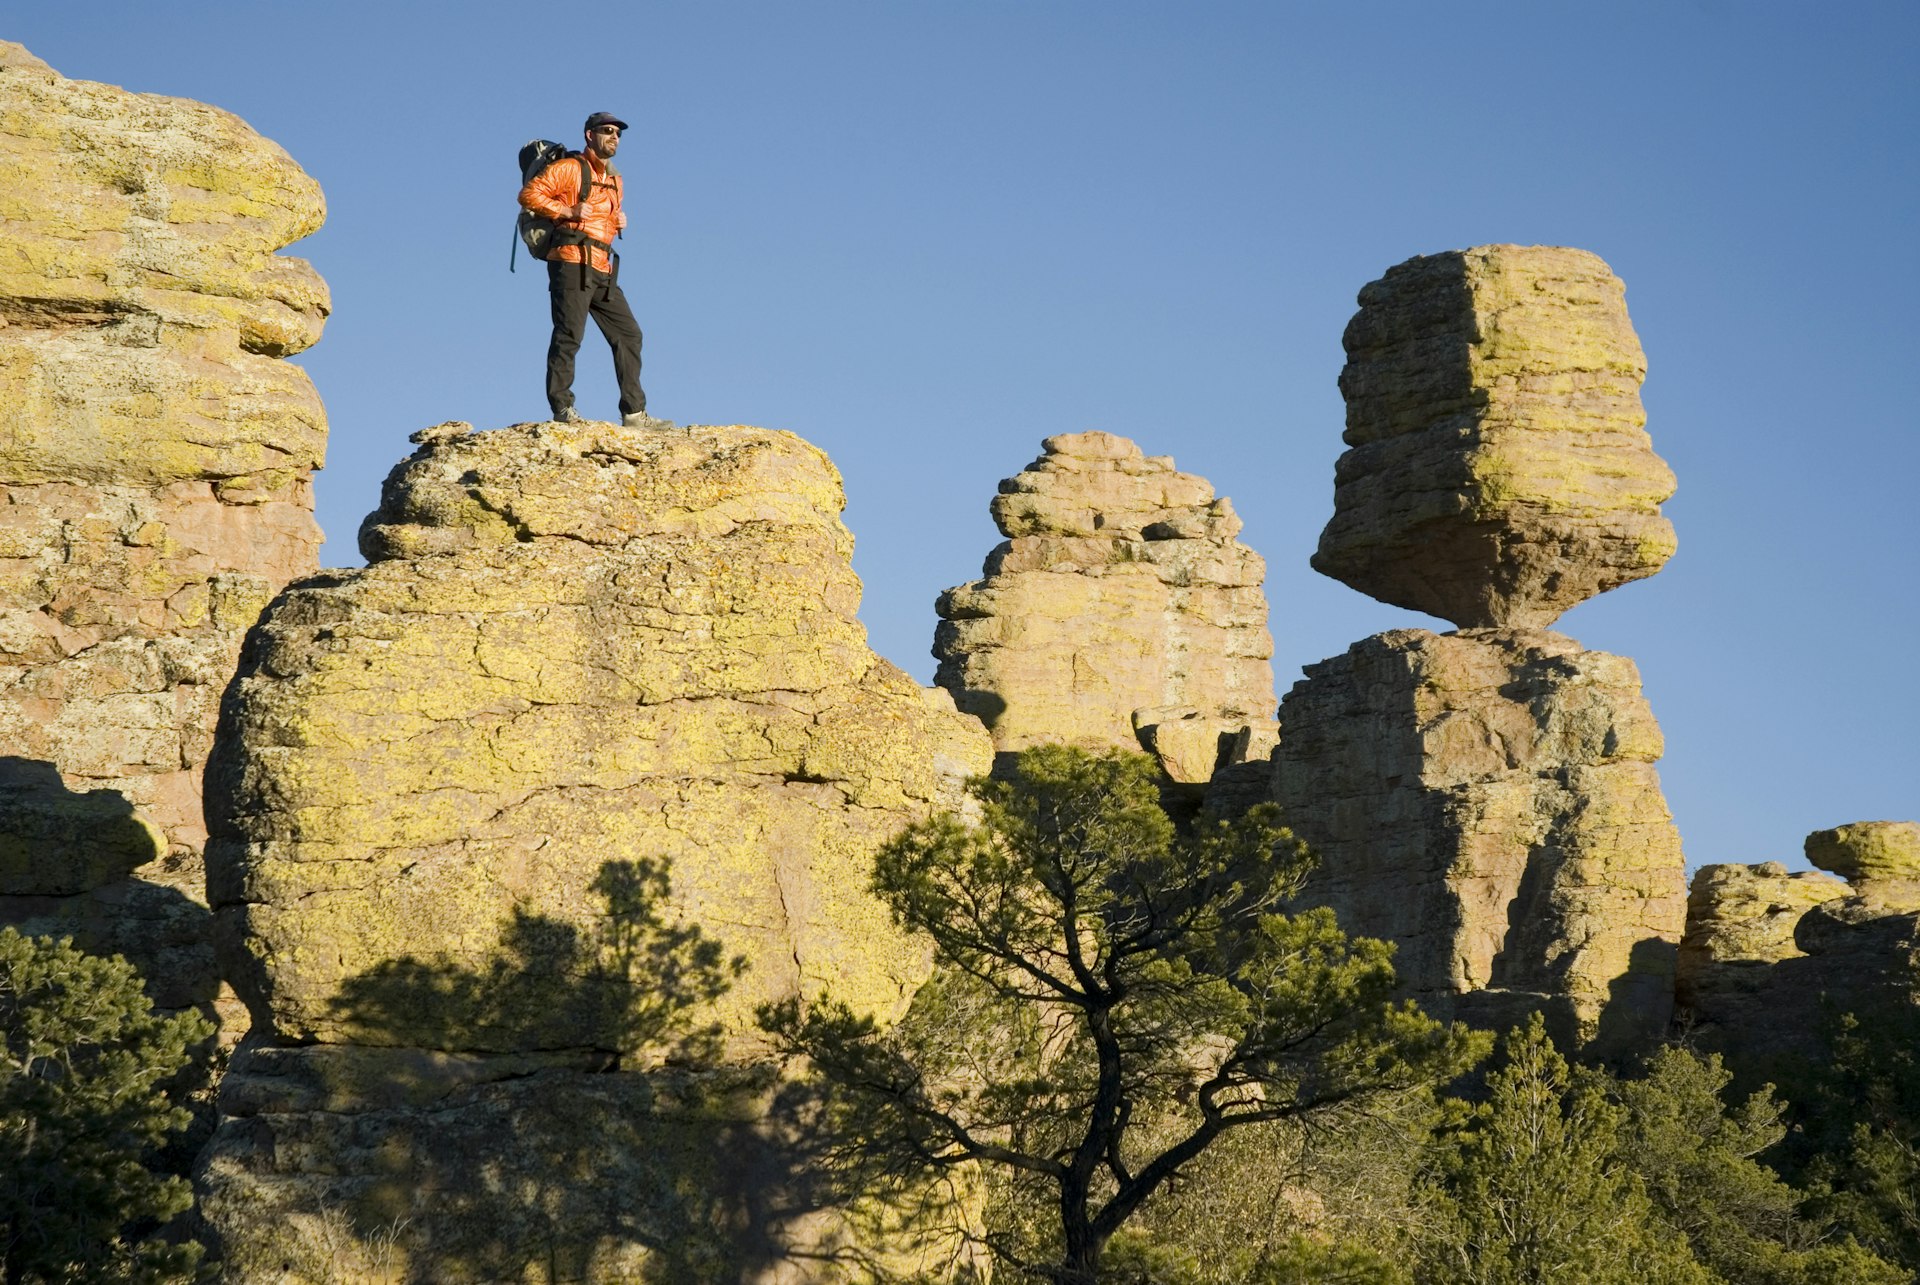 Man stands on rock near Balanced Rock; a large boulder teetering on a narrow plinth